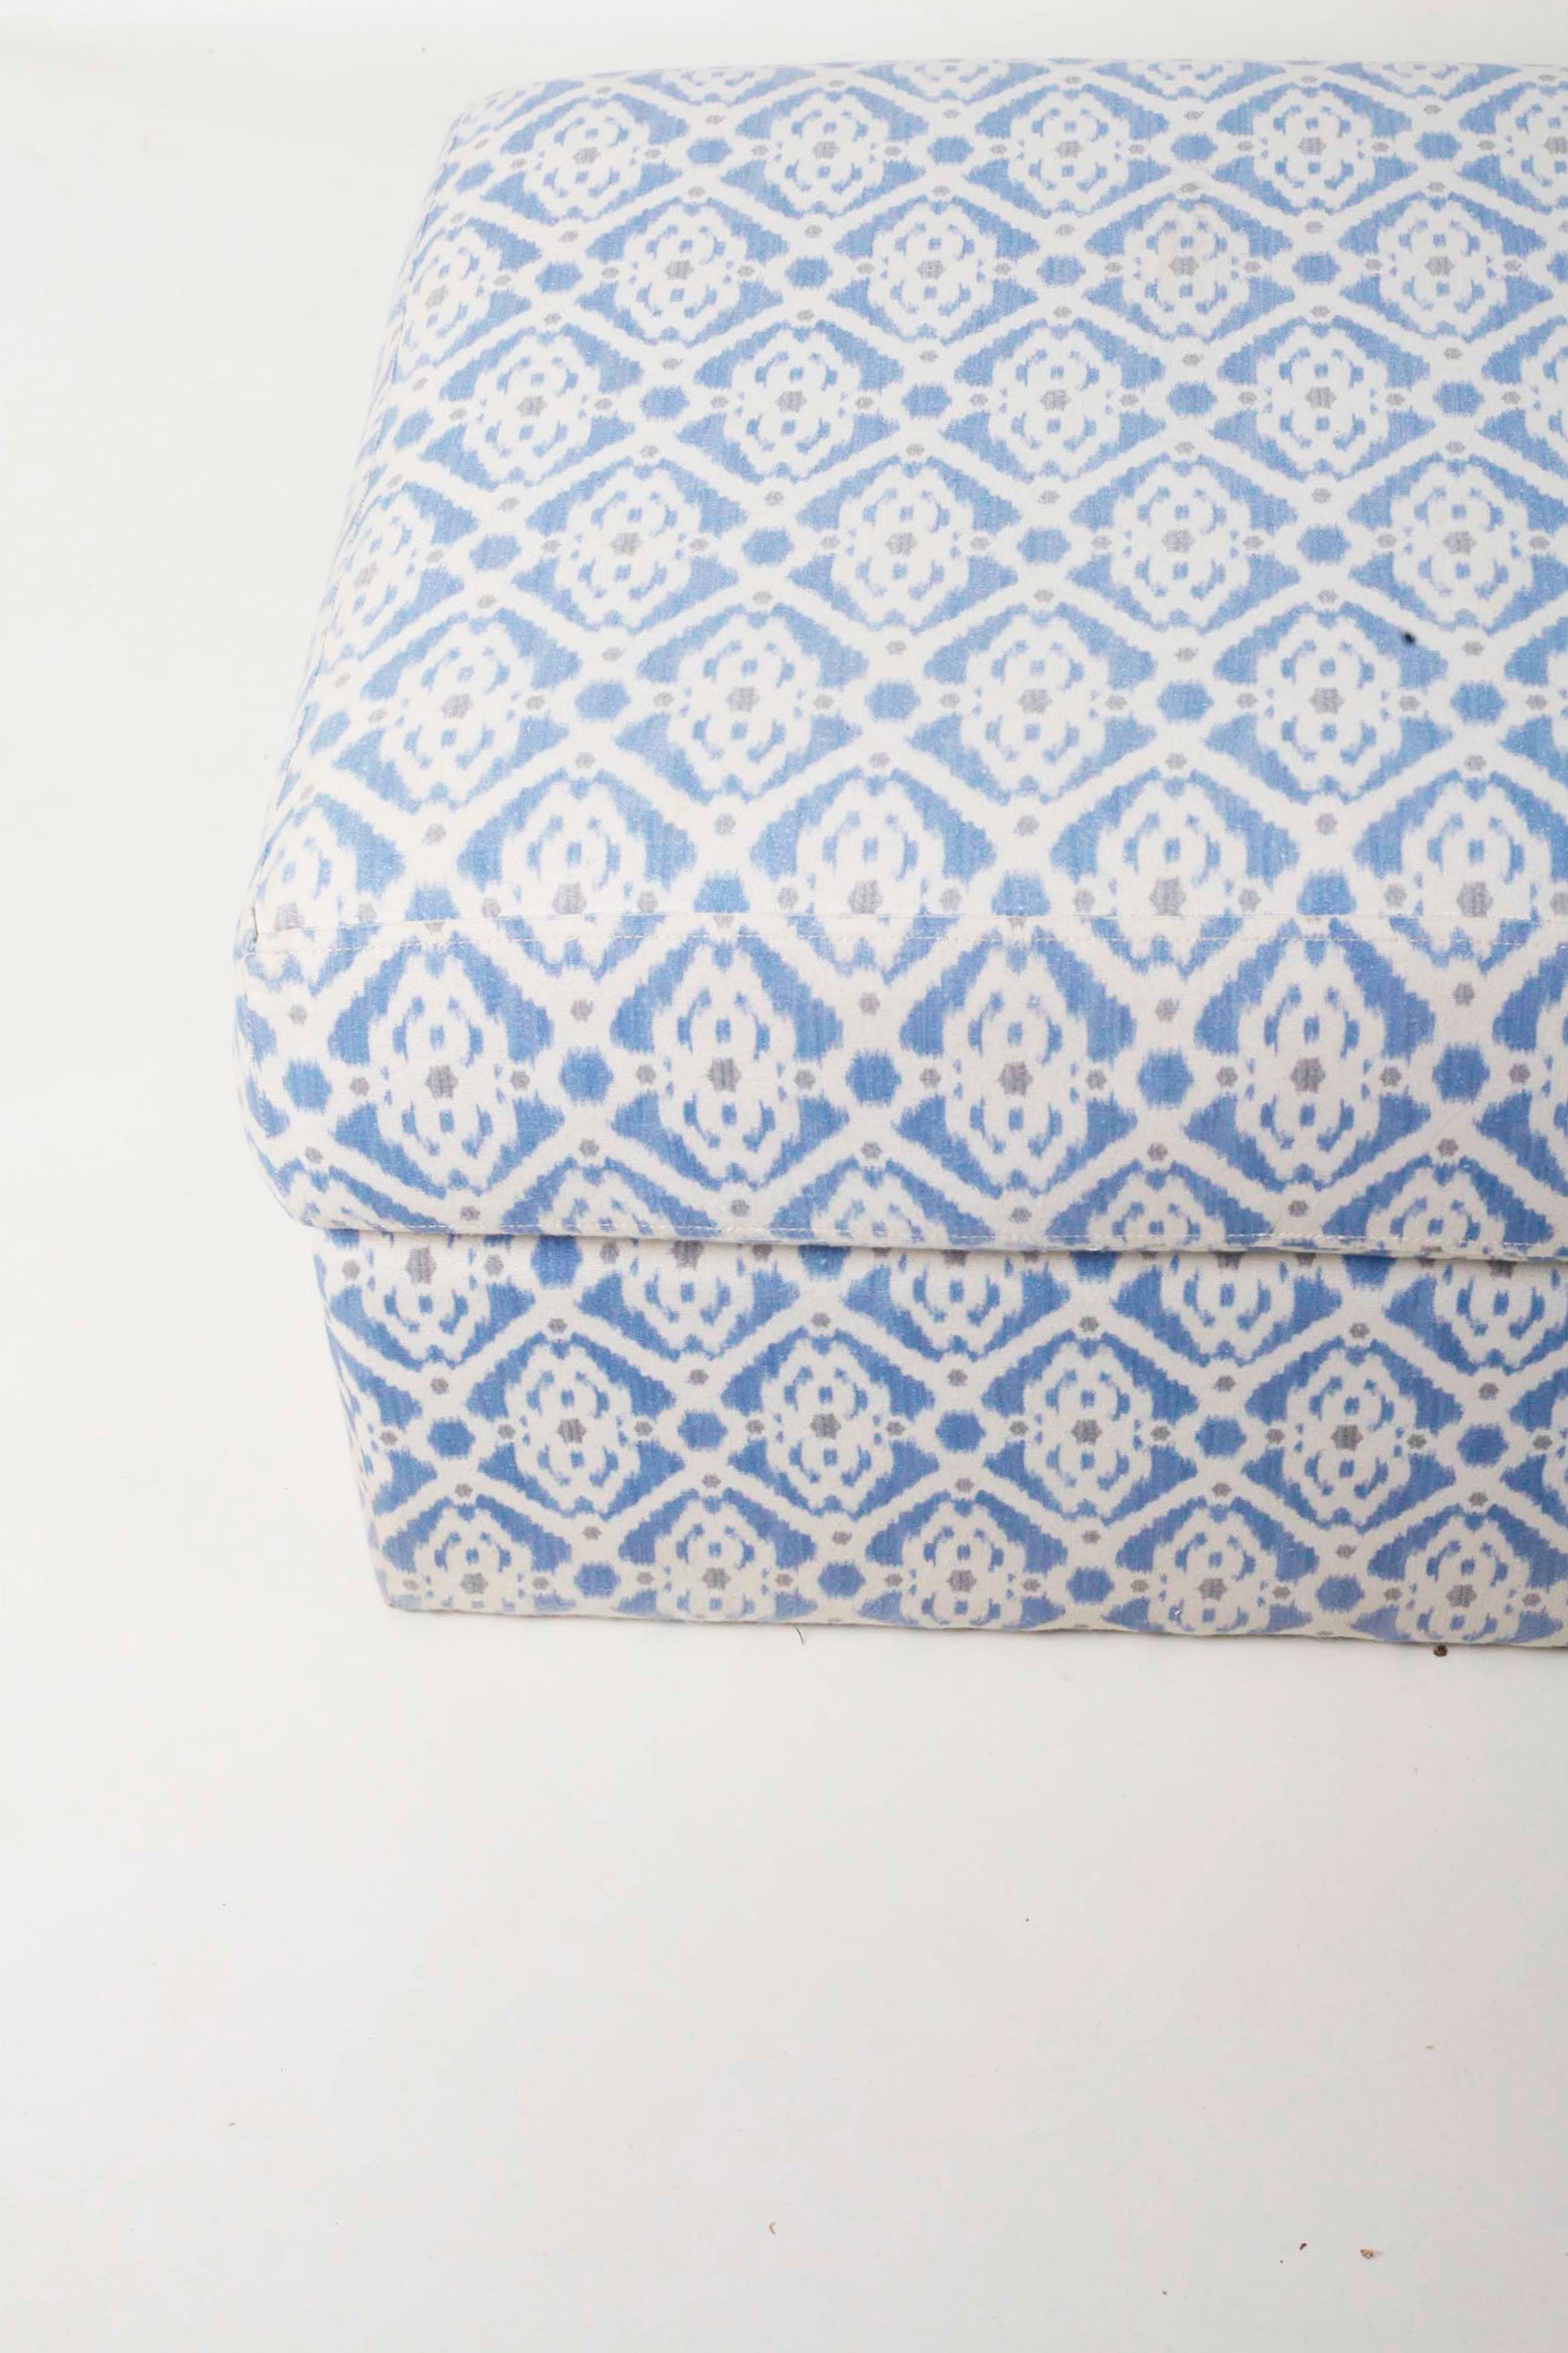 Blue Printed Fabric Ottoman